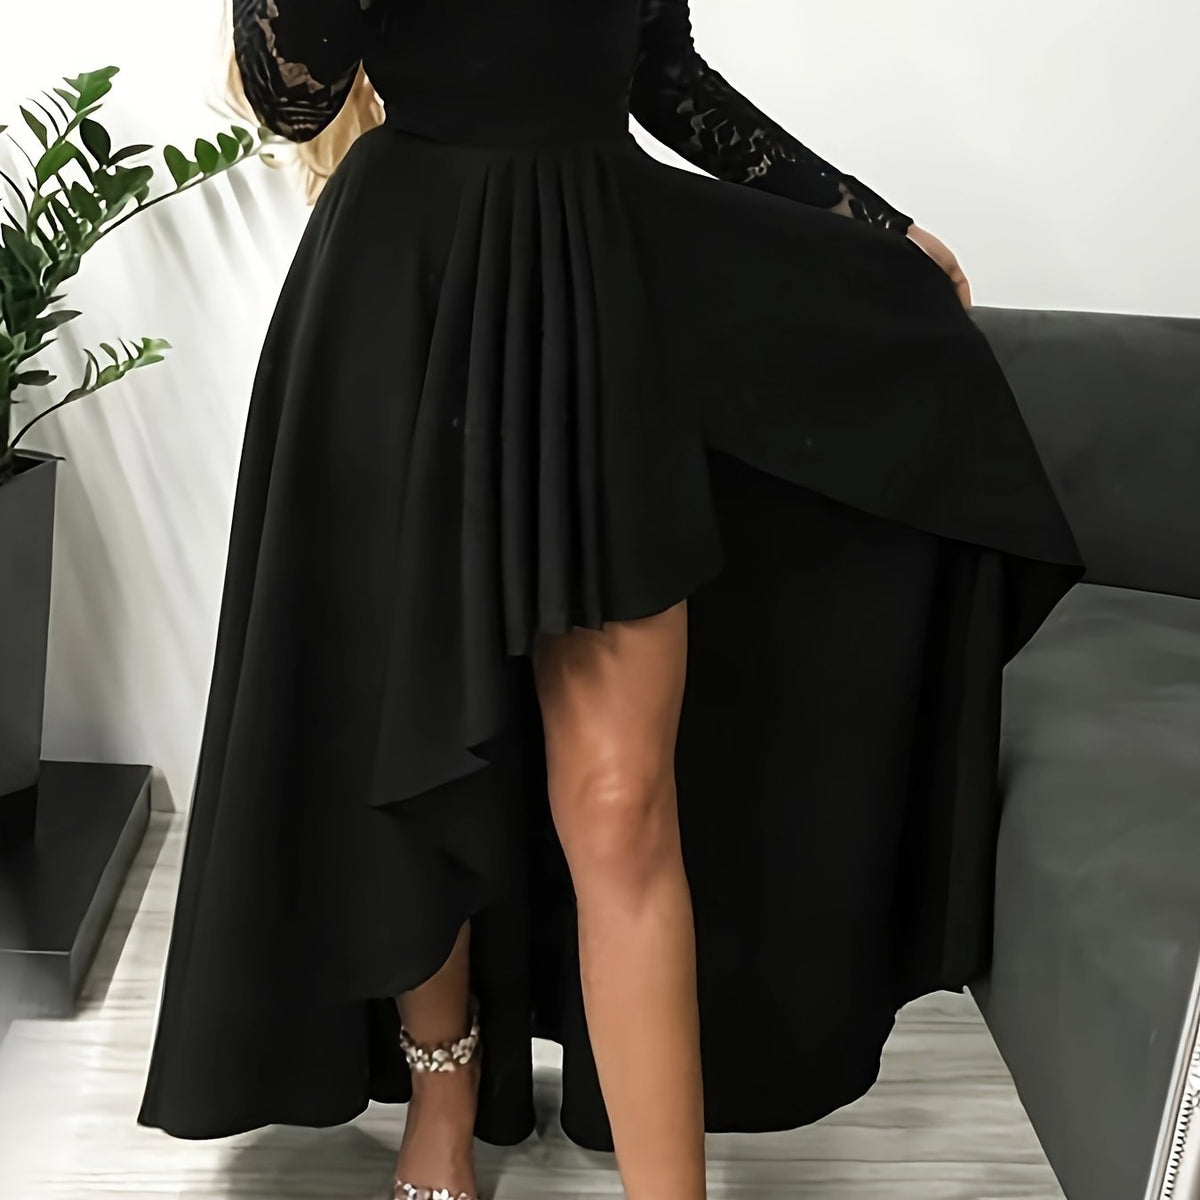 vlovelaw Women's Dresses Black V-neck Lace Backless High And Low Hem Evening Dress